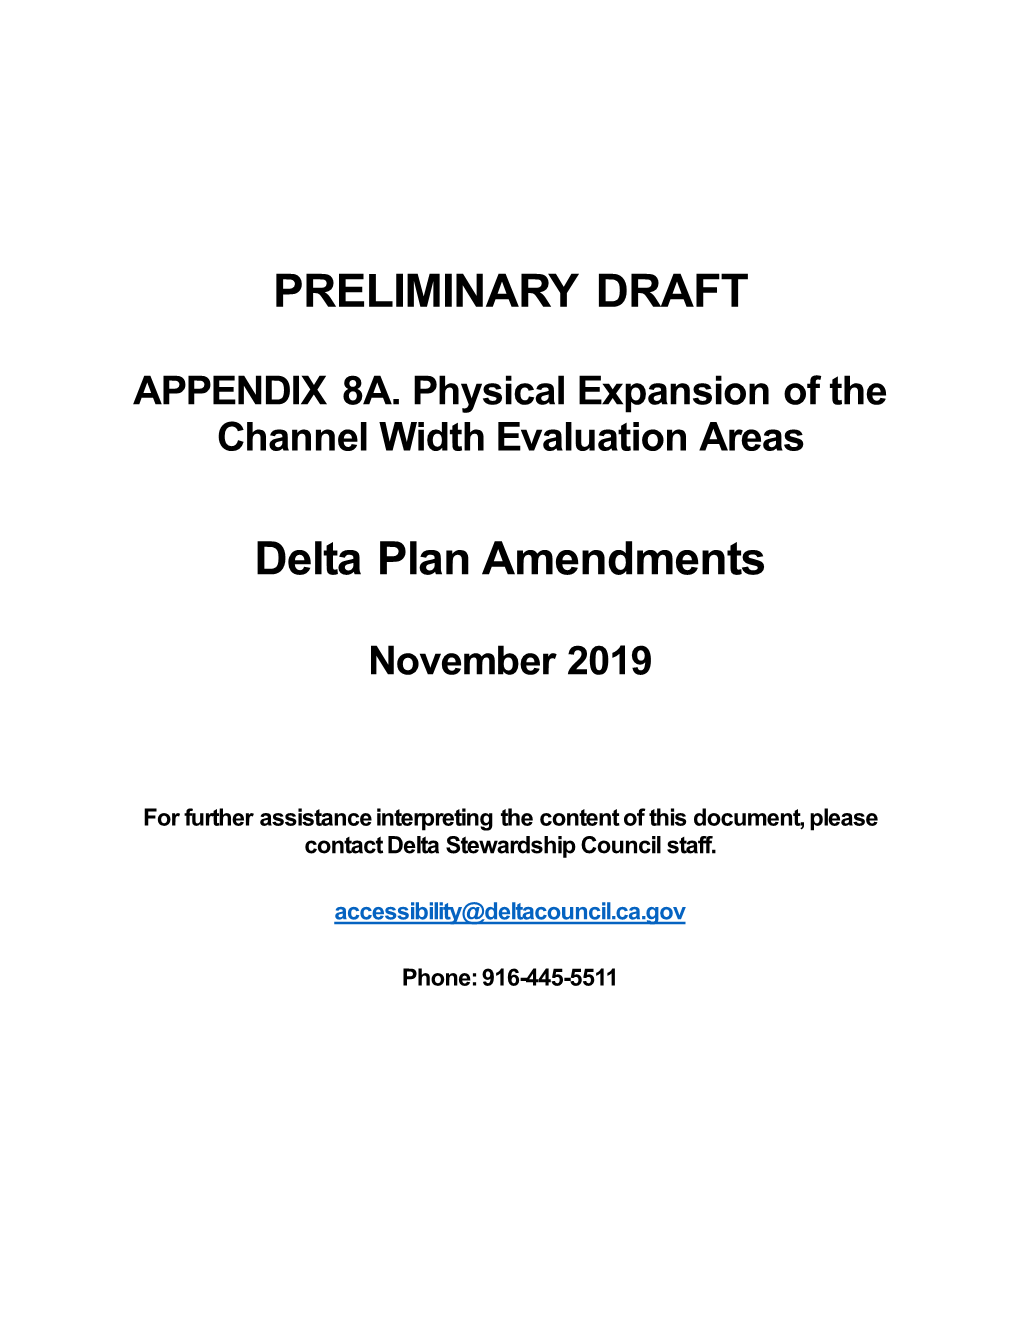 Preliminary Draft Appendix 8A